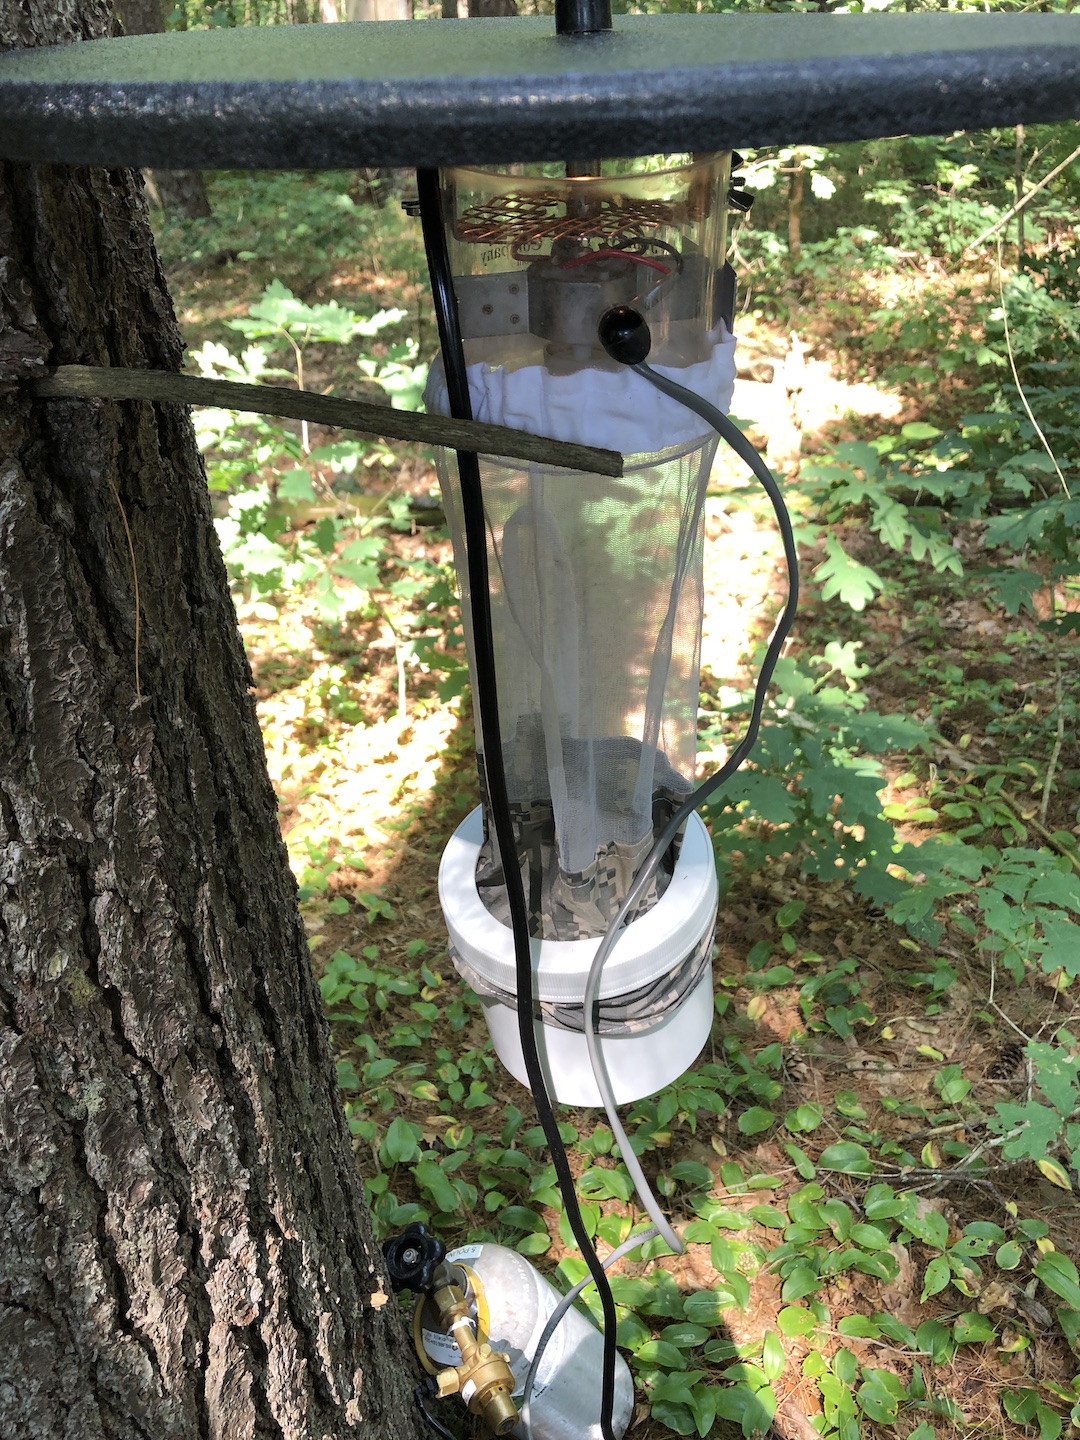 CO2 light trap deployed